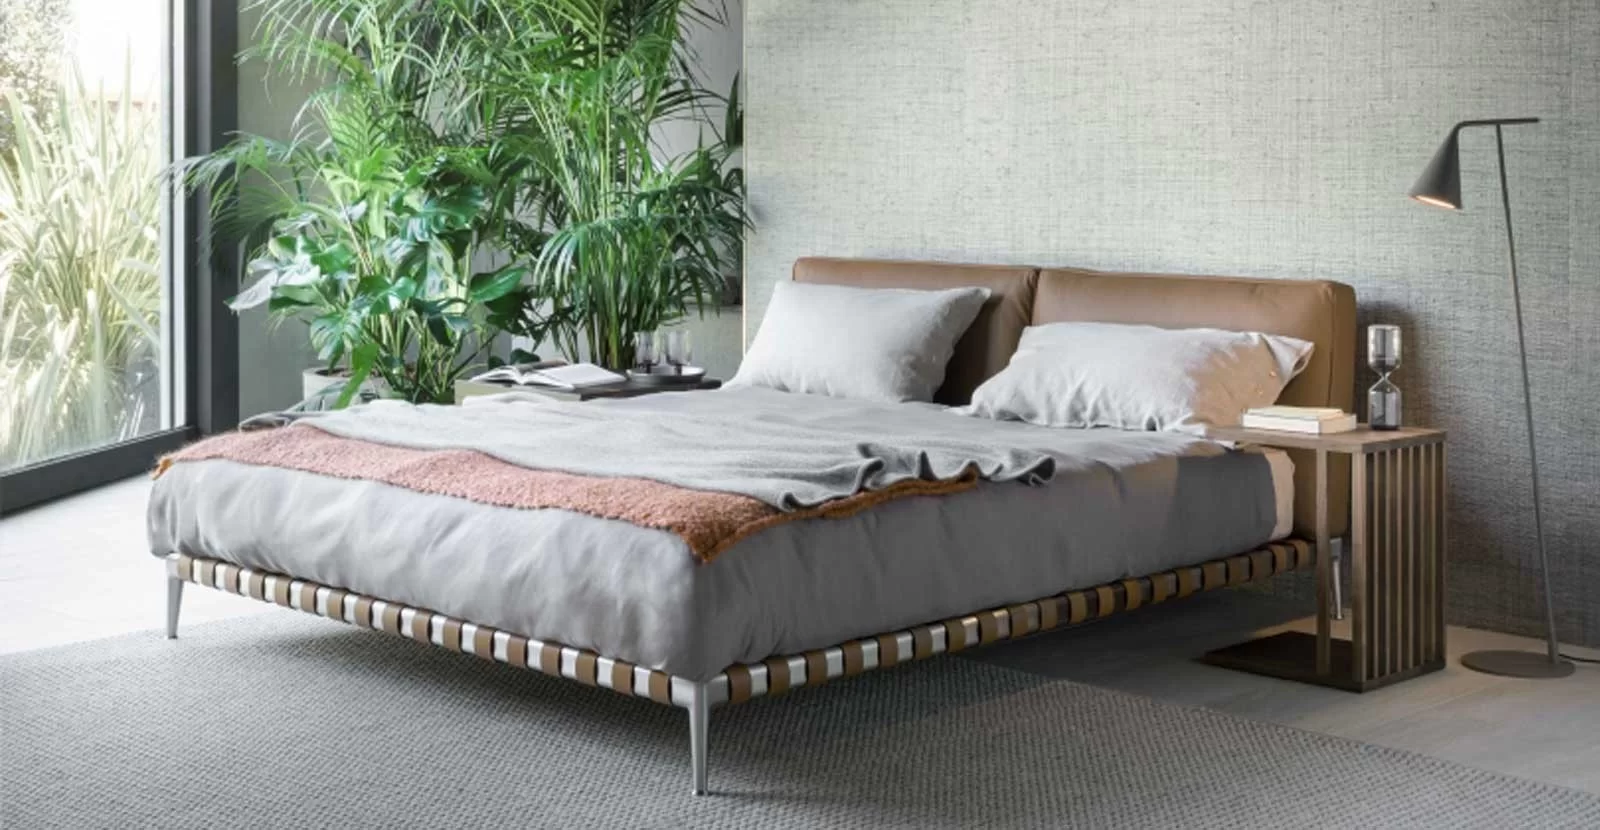 Trouvez les meilleurs lits Made in Italy sur Mobilificio Marchese